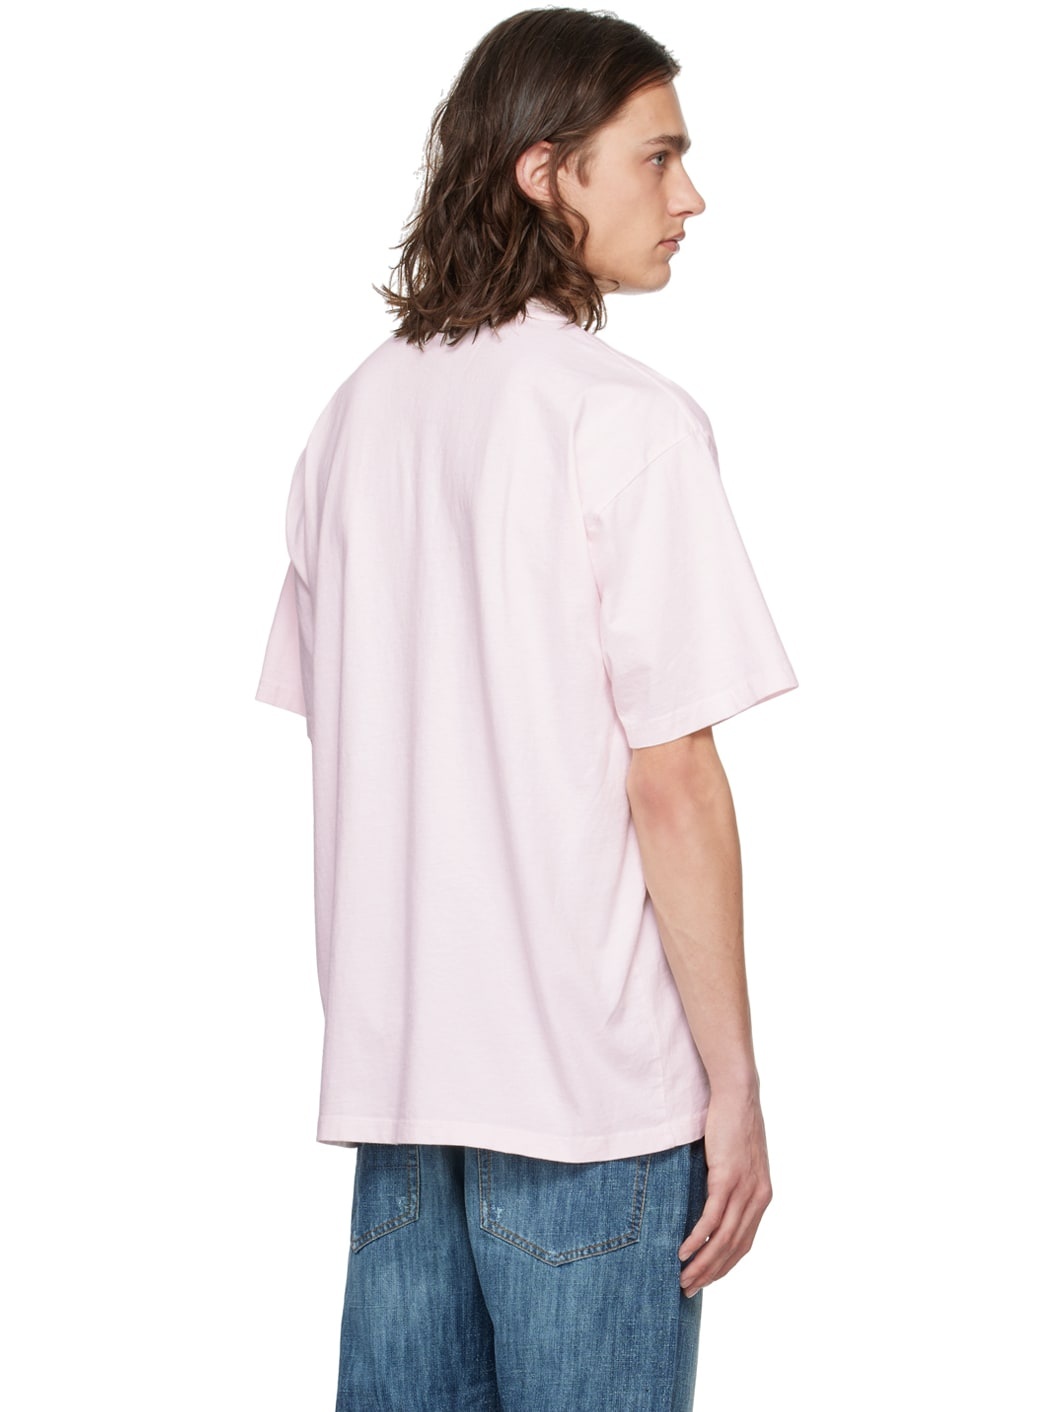 Pink Printed T-Shirt - 3